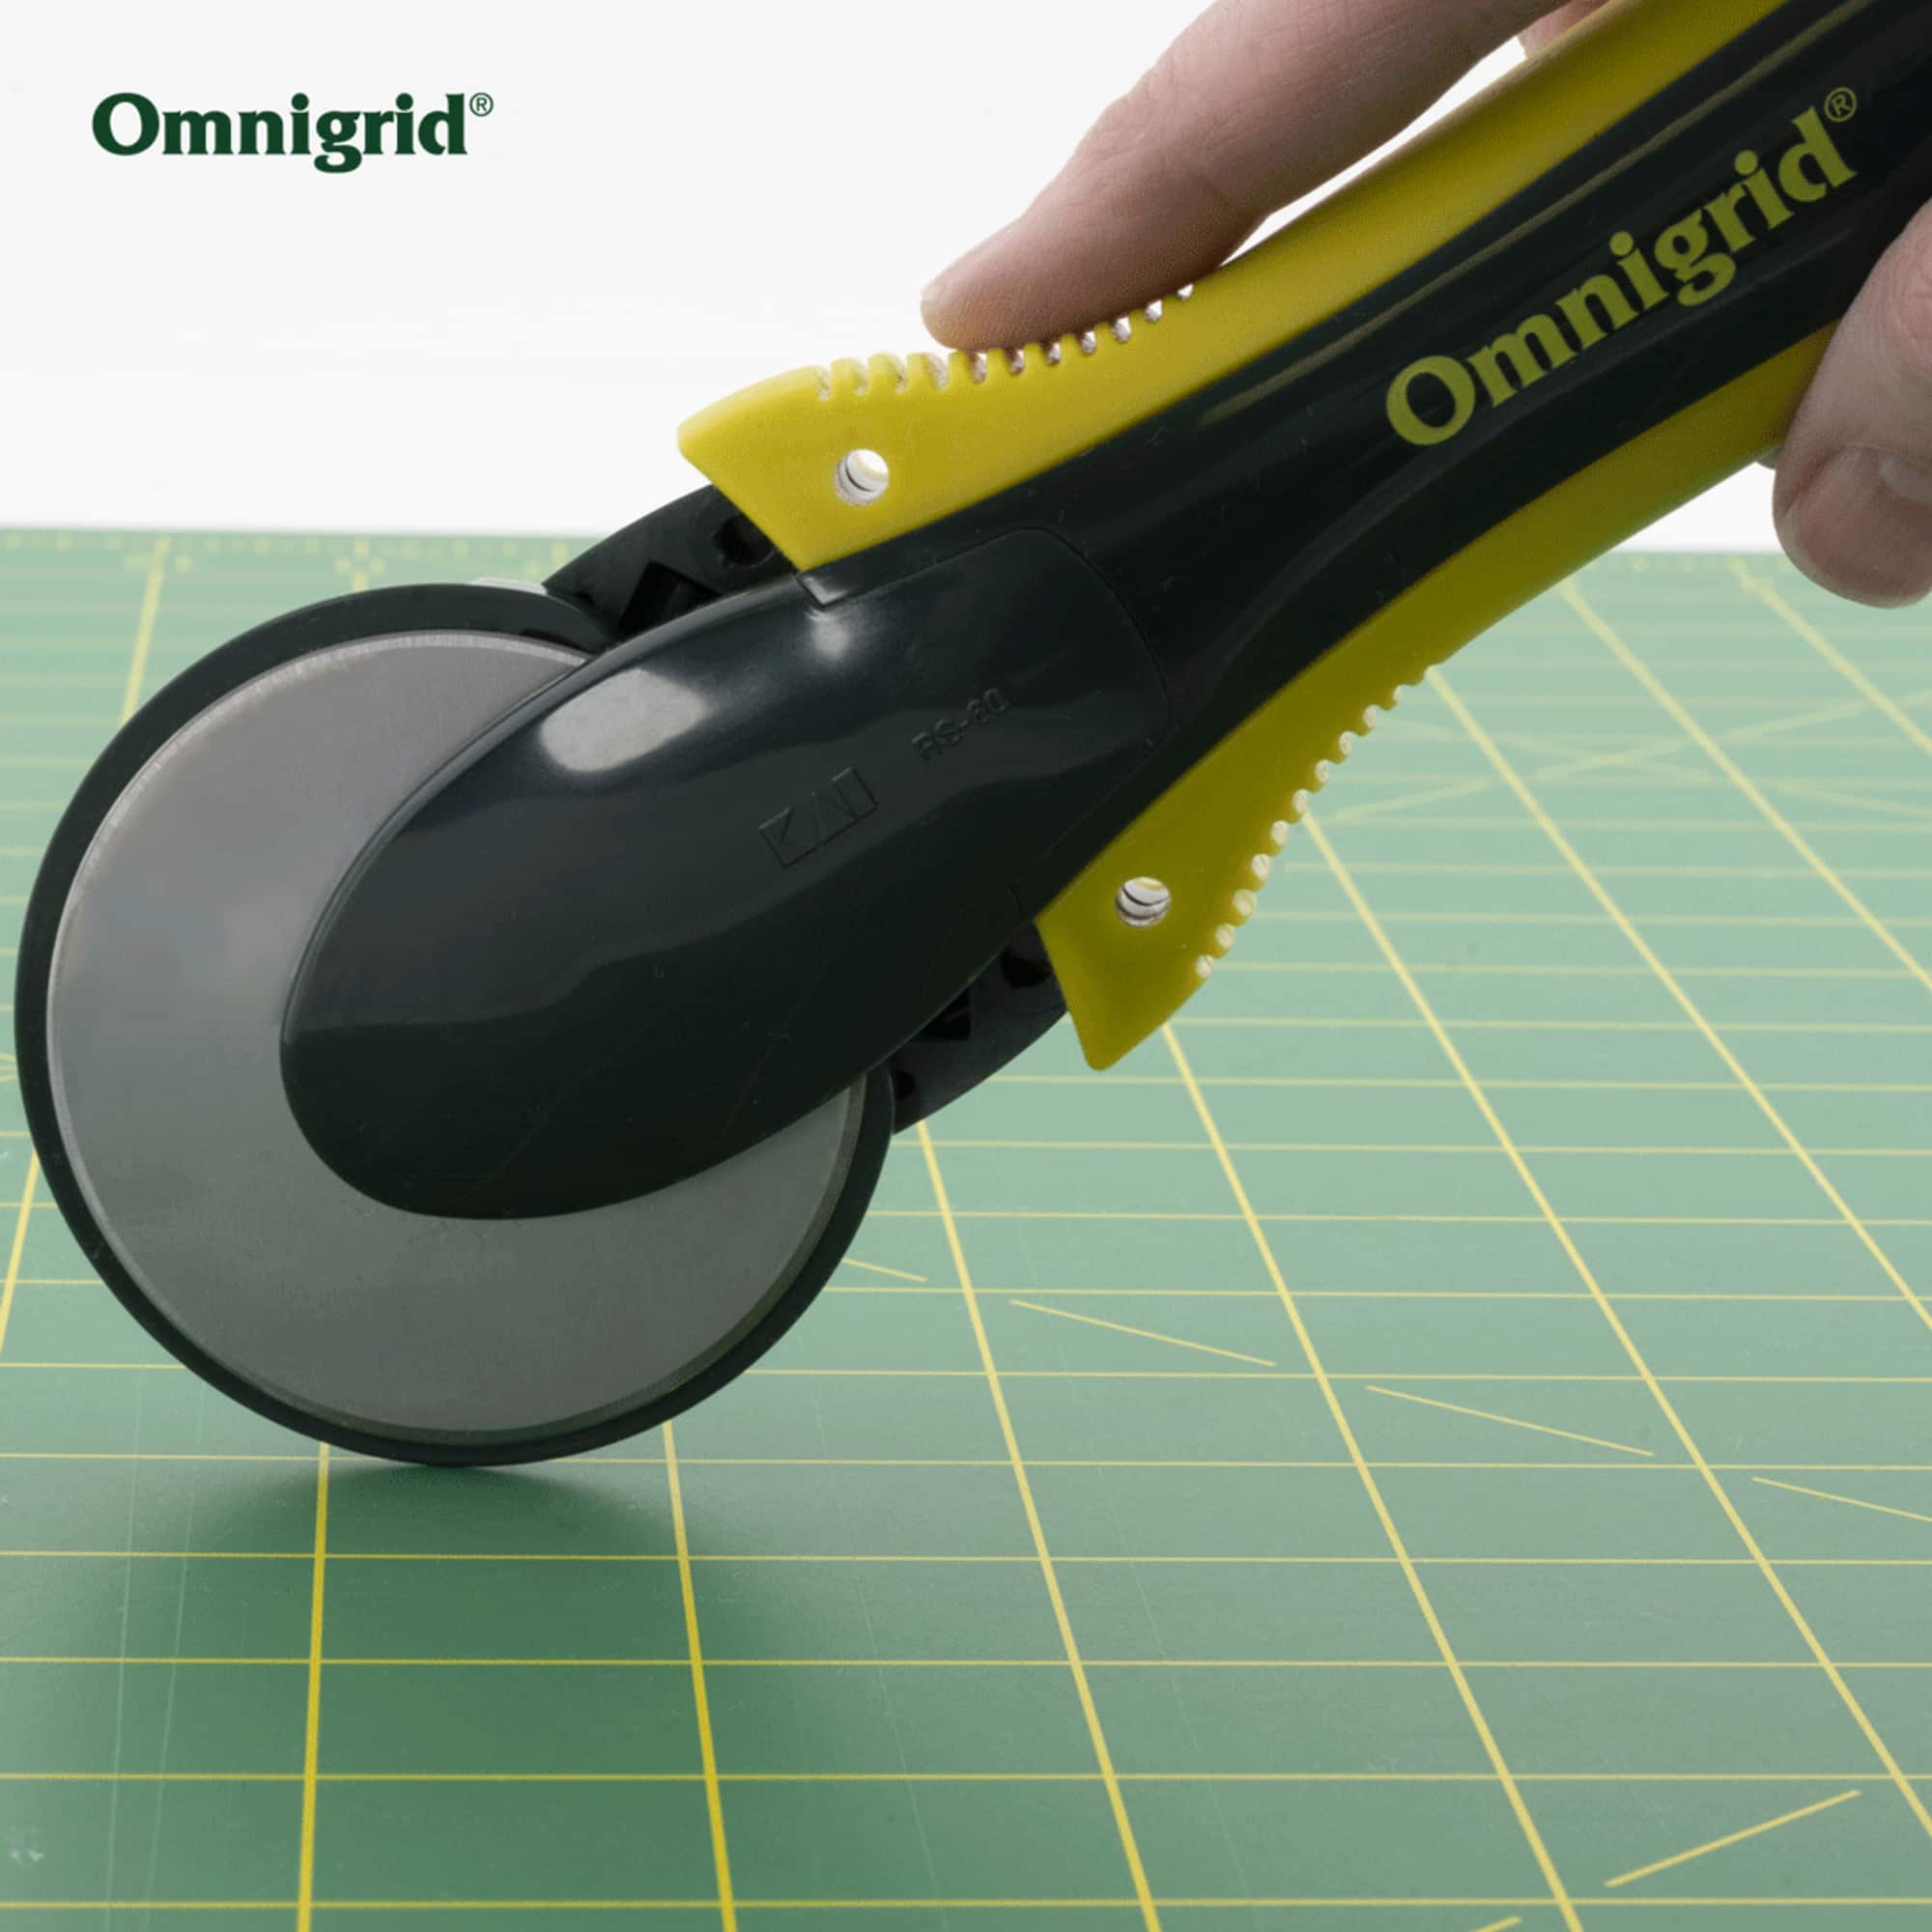 Omnigrid Rotary Cutter, 60mm